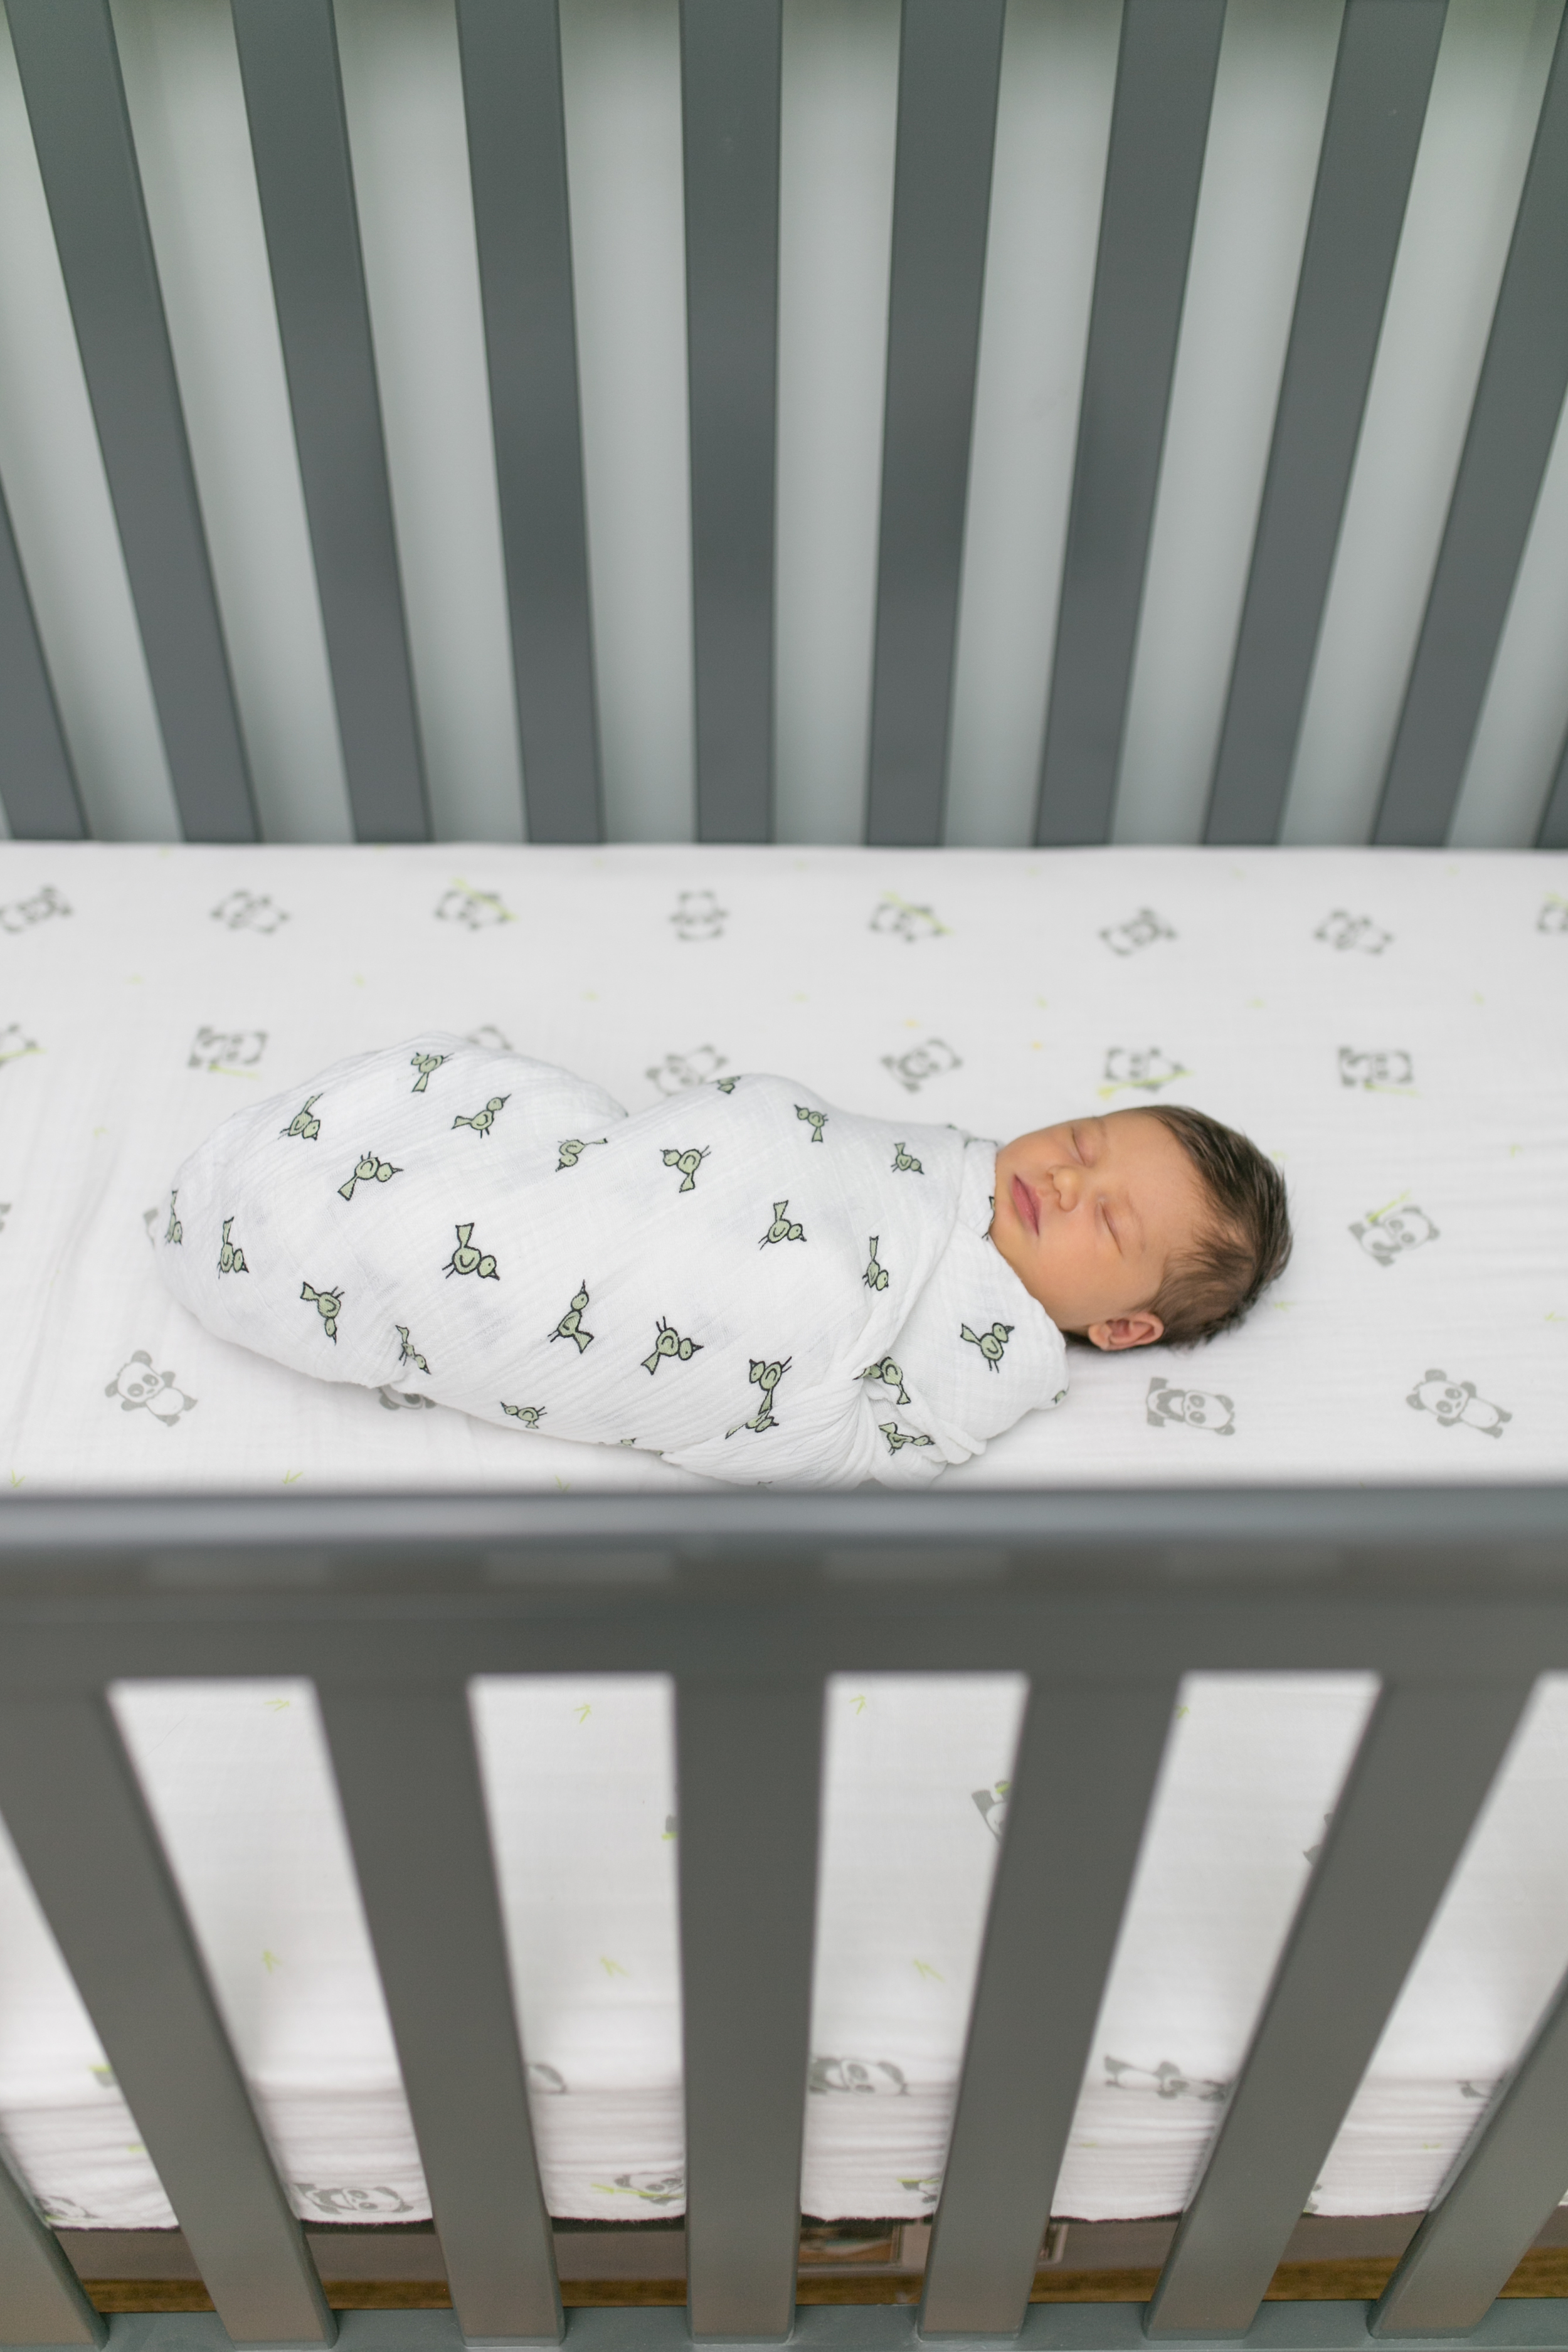 vanessa wyler brookfield pewaukee lifestyle newborn photography photos